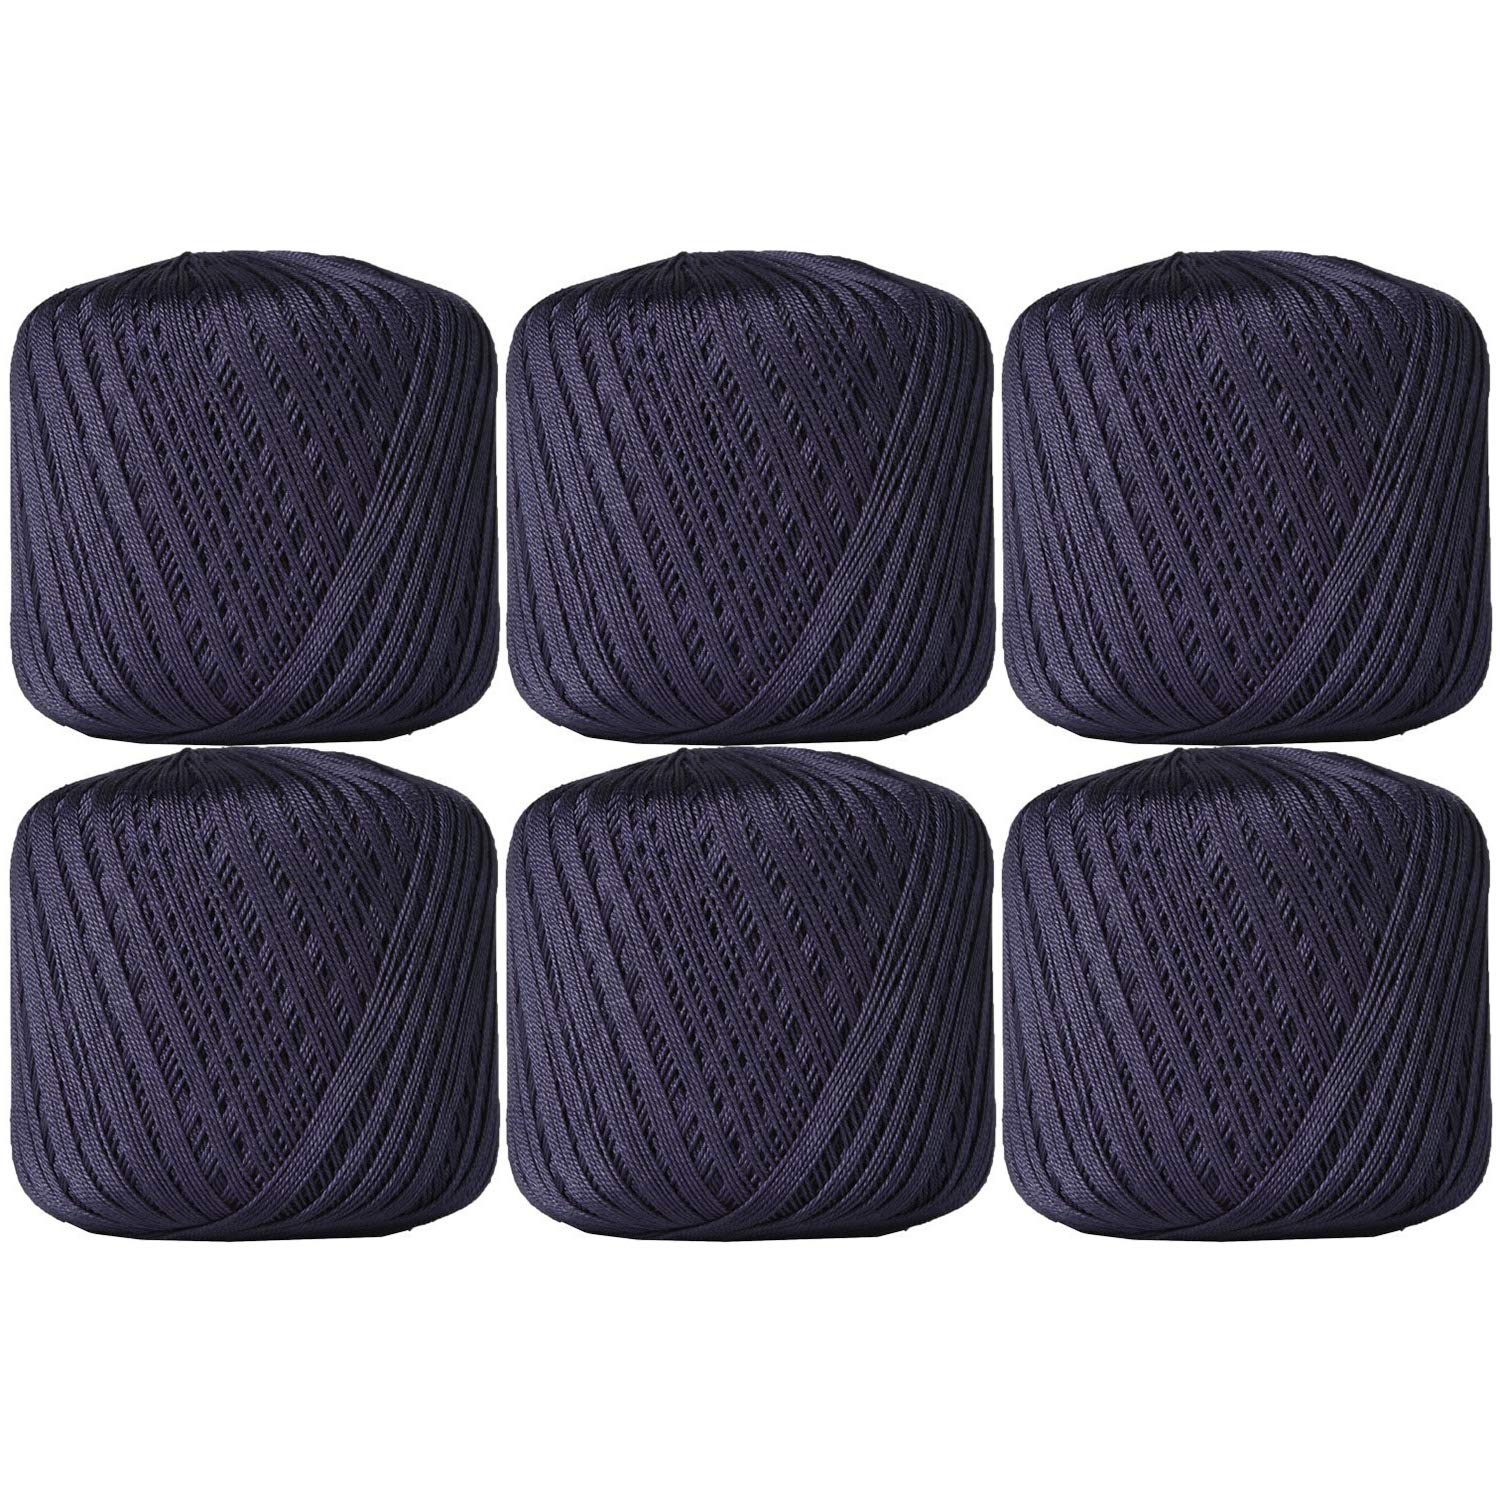 Threadart 6 Ball Pack Threadart 100 Pure Cotton Crochet Thread - Size 10 - Color 38 - Navy - Size 10 And 3 - Singles And Bulk Packs Availa